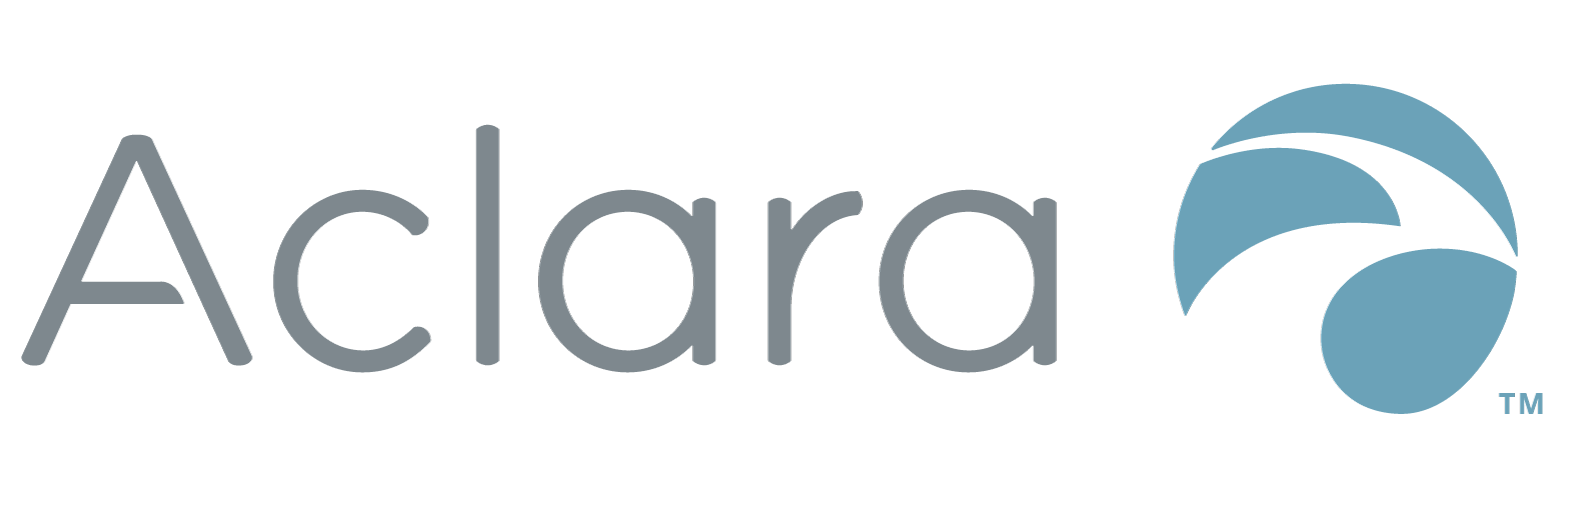 Aclara Logo - Aclara Competitors, Revenue and Employees - Owler Company Profile